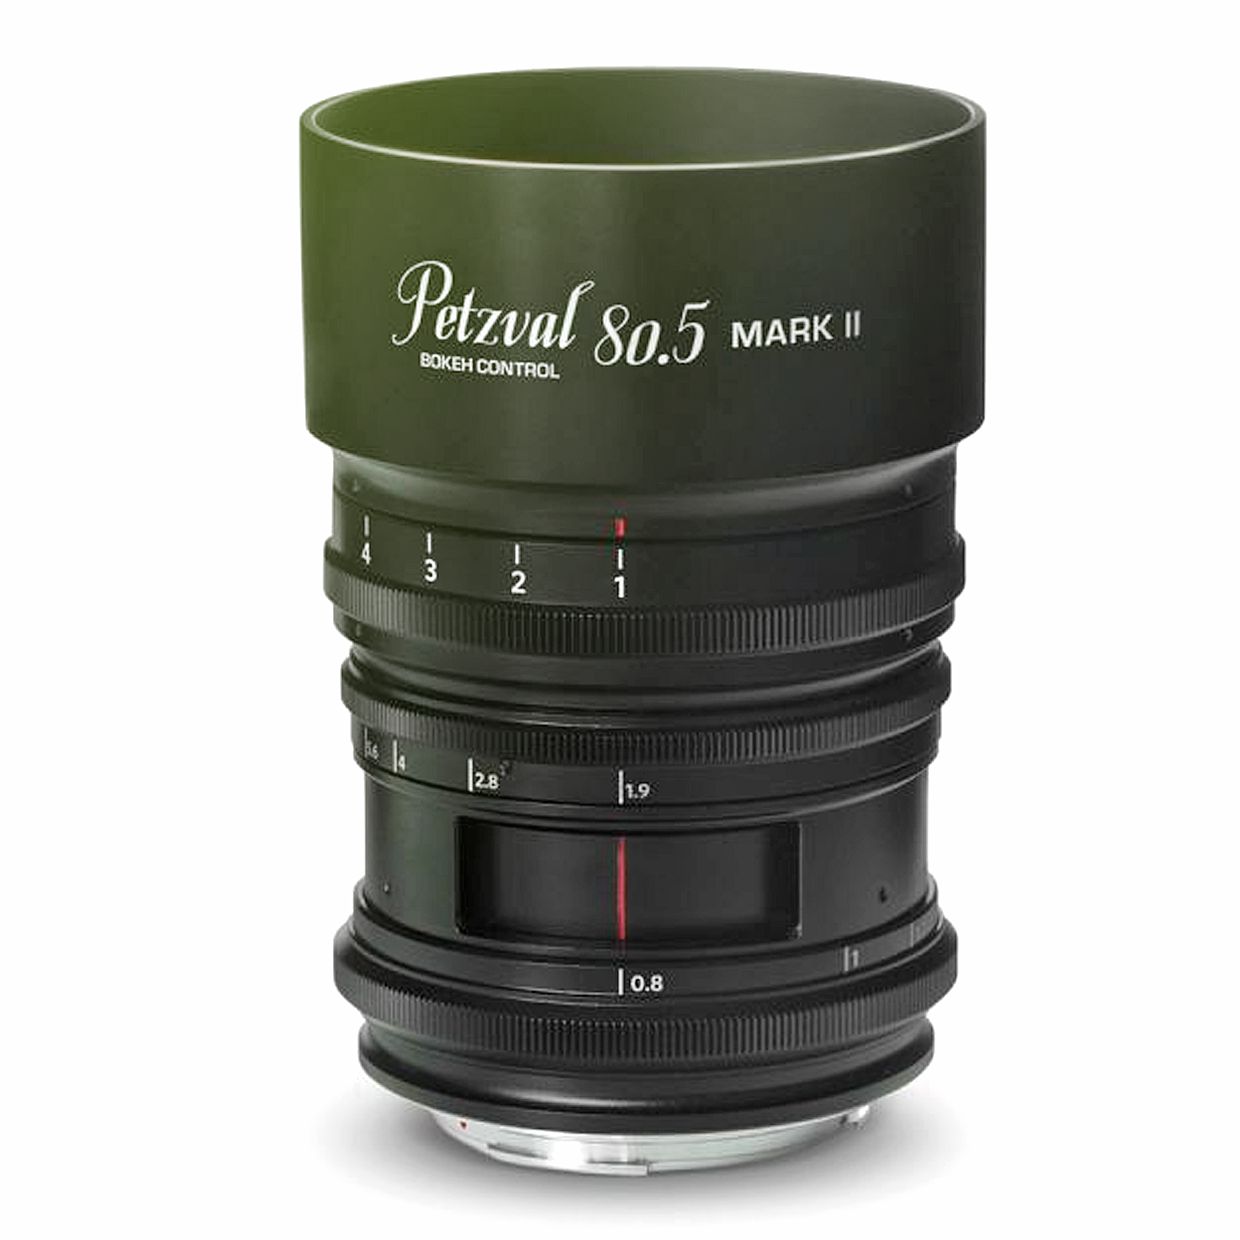 New Petzval 80.5mm f/1.9 MKII Bokeh Control Art Lens (Canon EF)